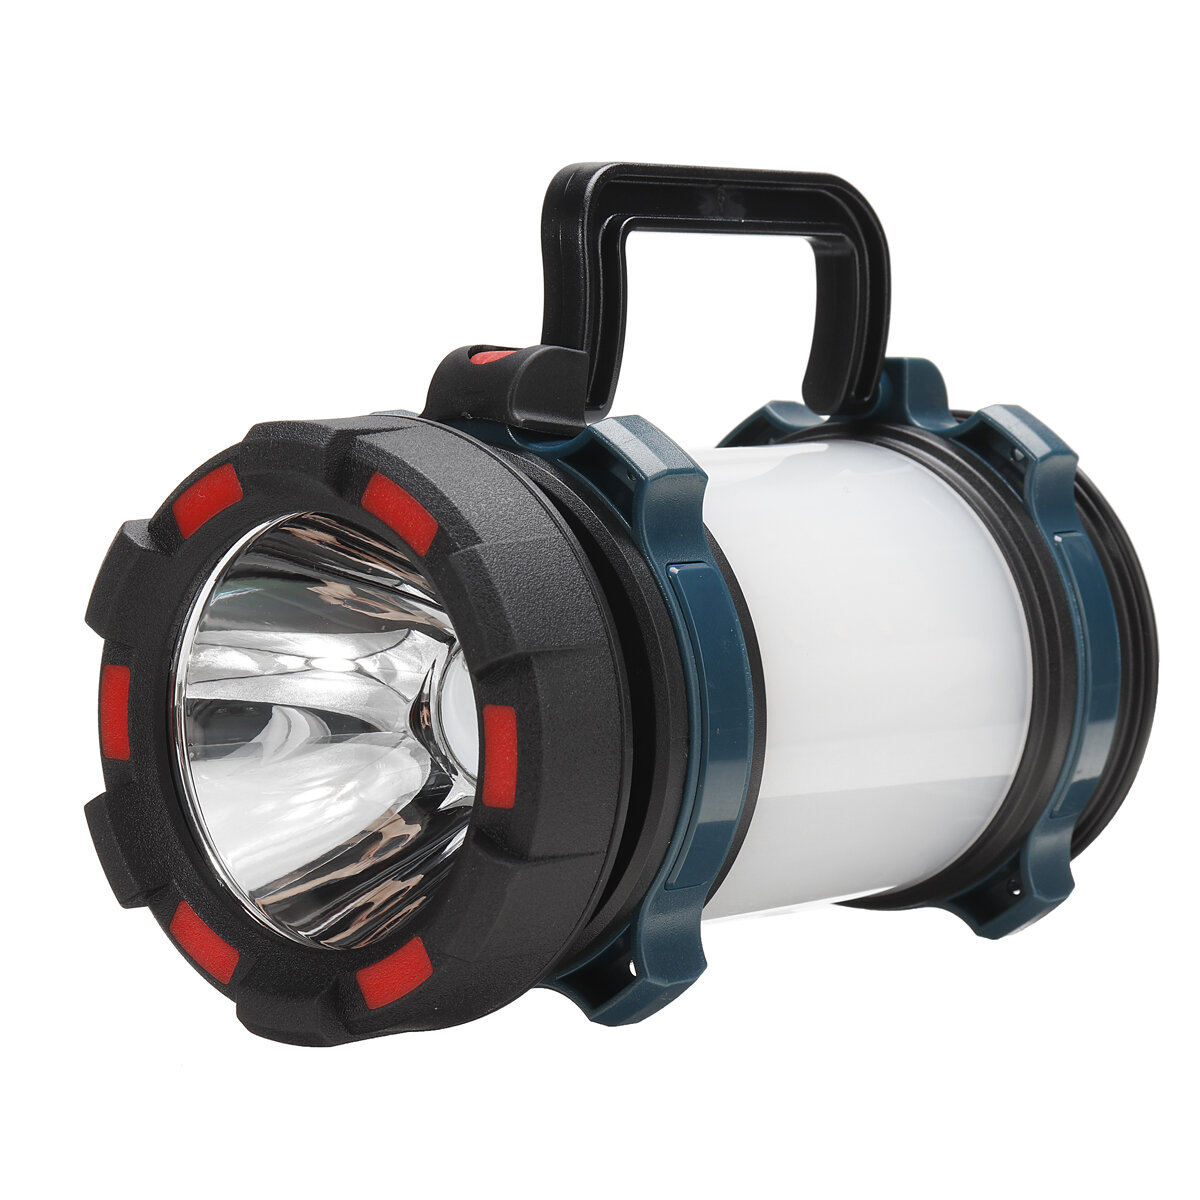 LED Camping Light Work Light Portable Camping Emergency Lantern Floodlight Flashlight USB Rechargeab